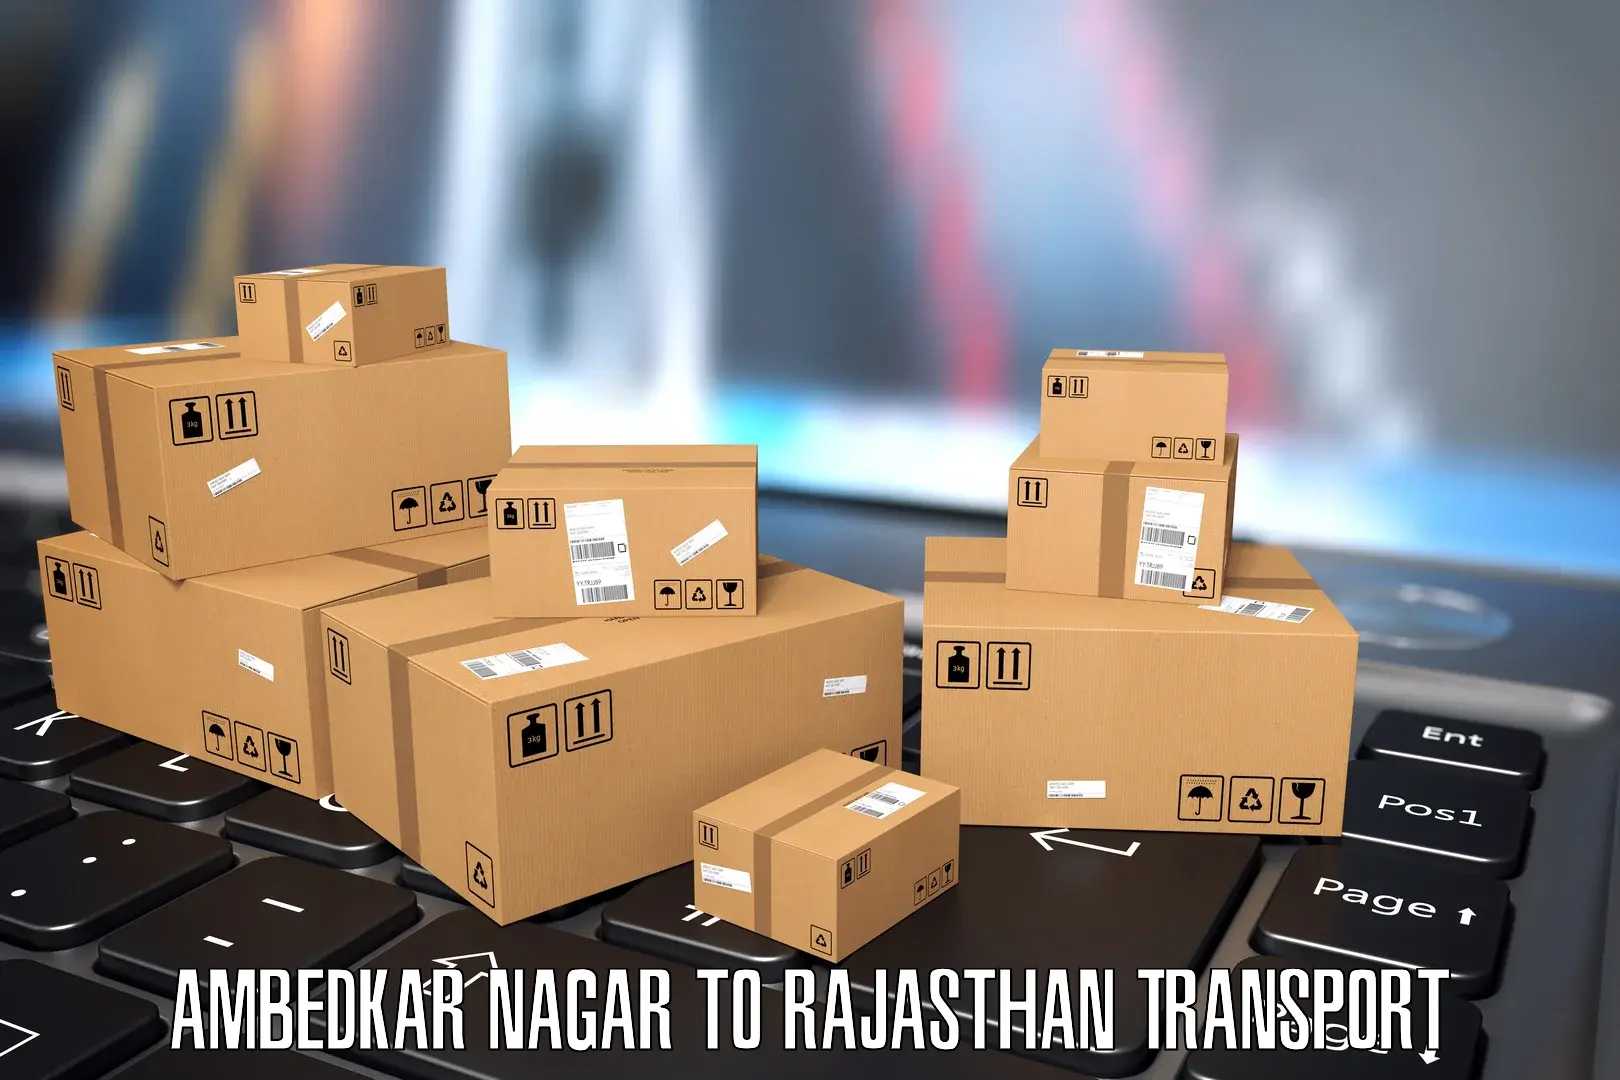 Shipping partner Ambedkar Nagar to Jodhpur